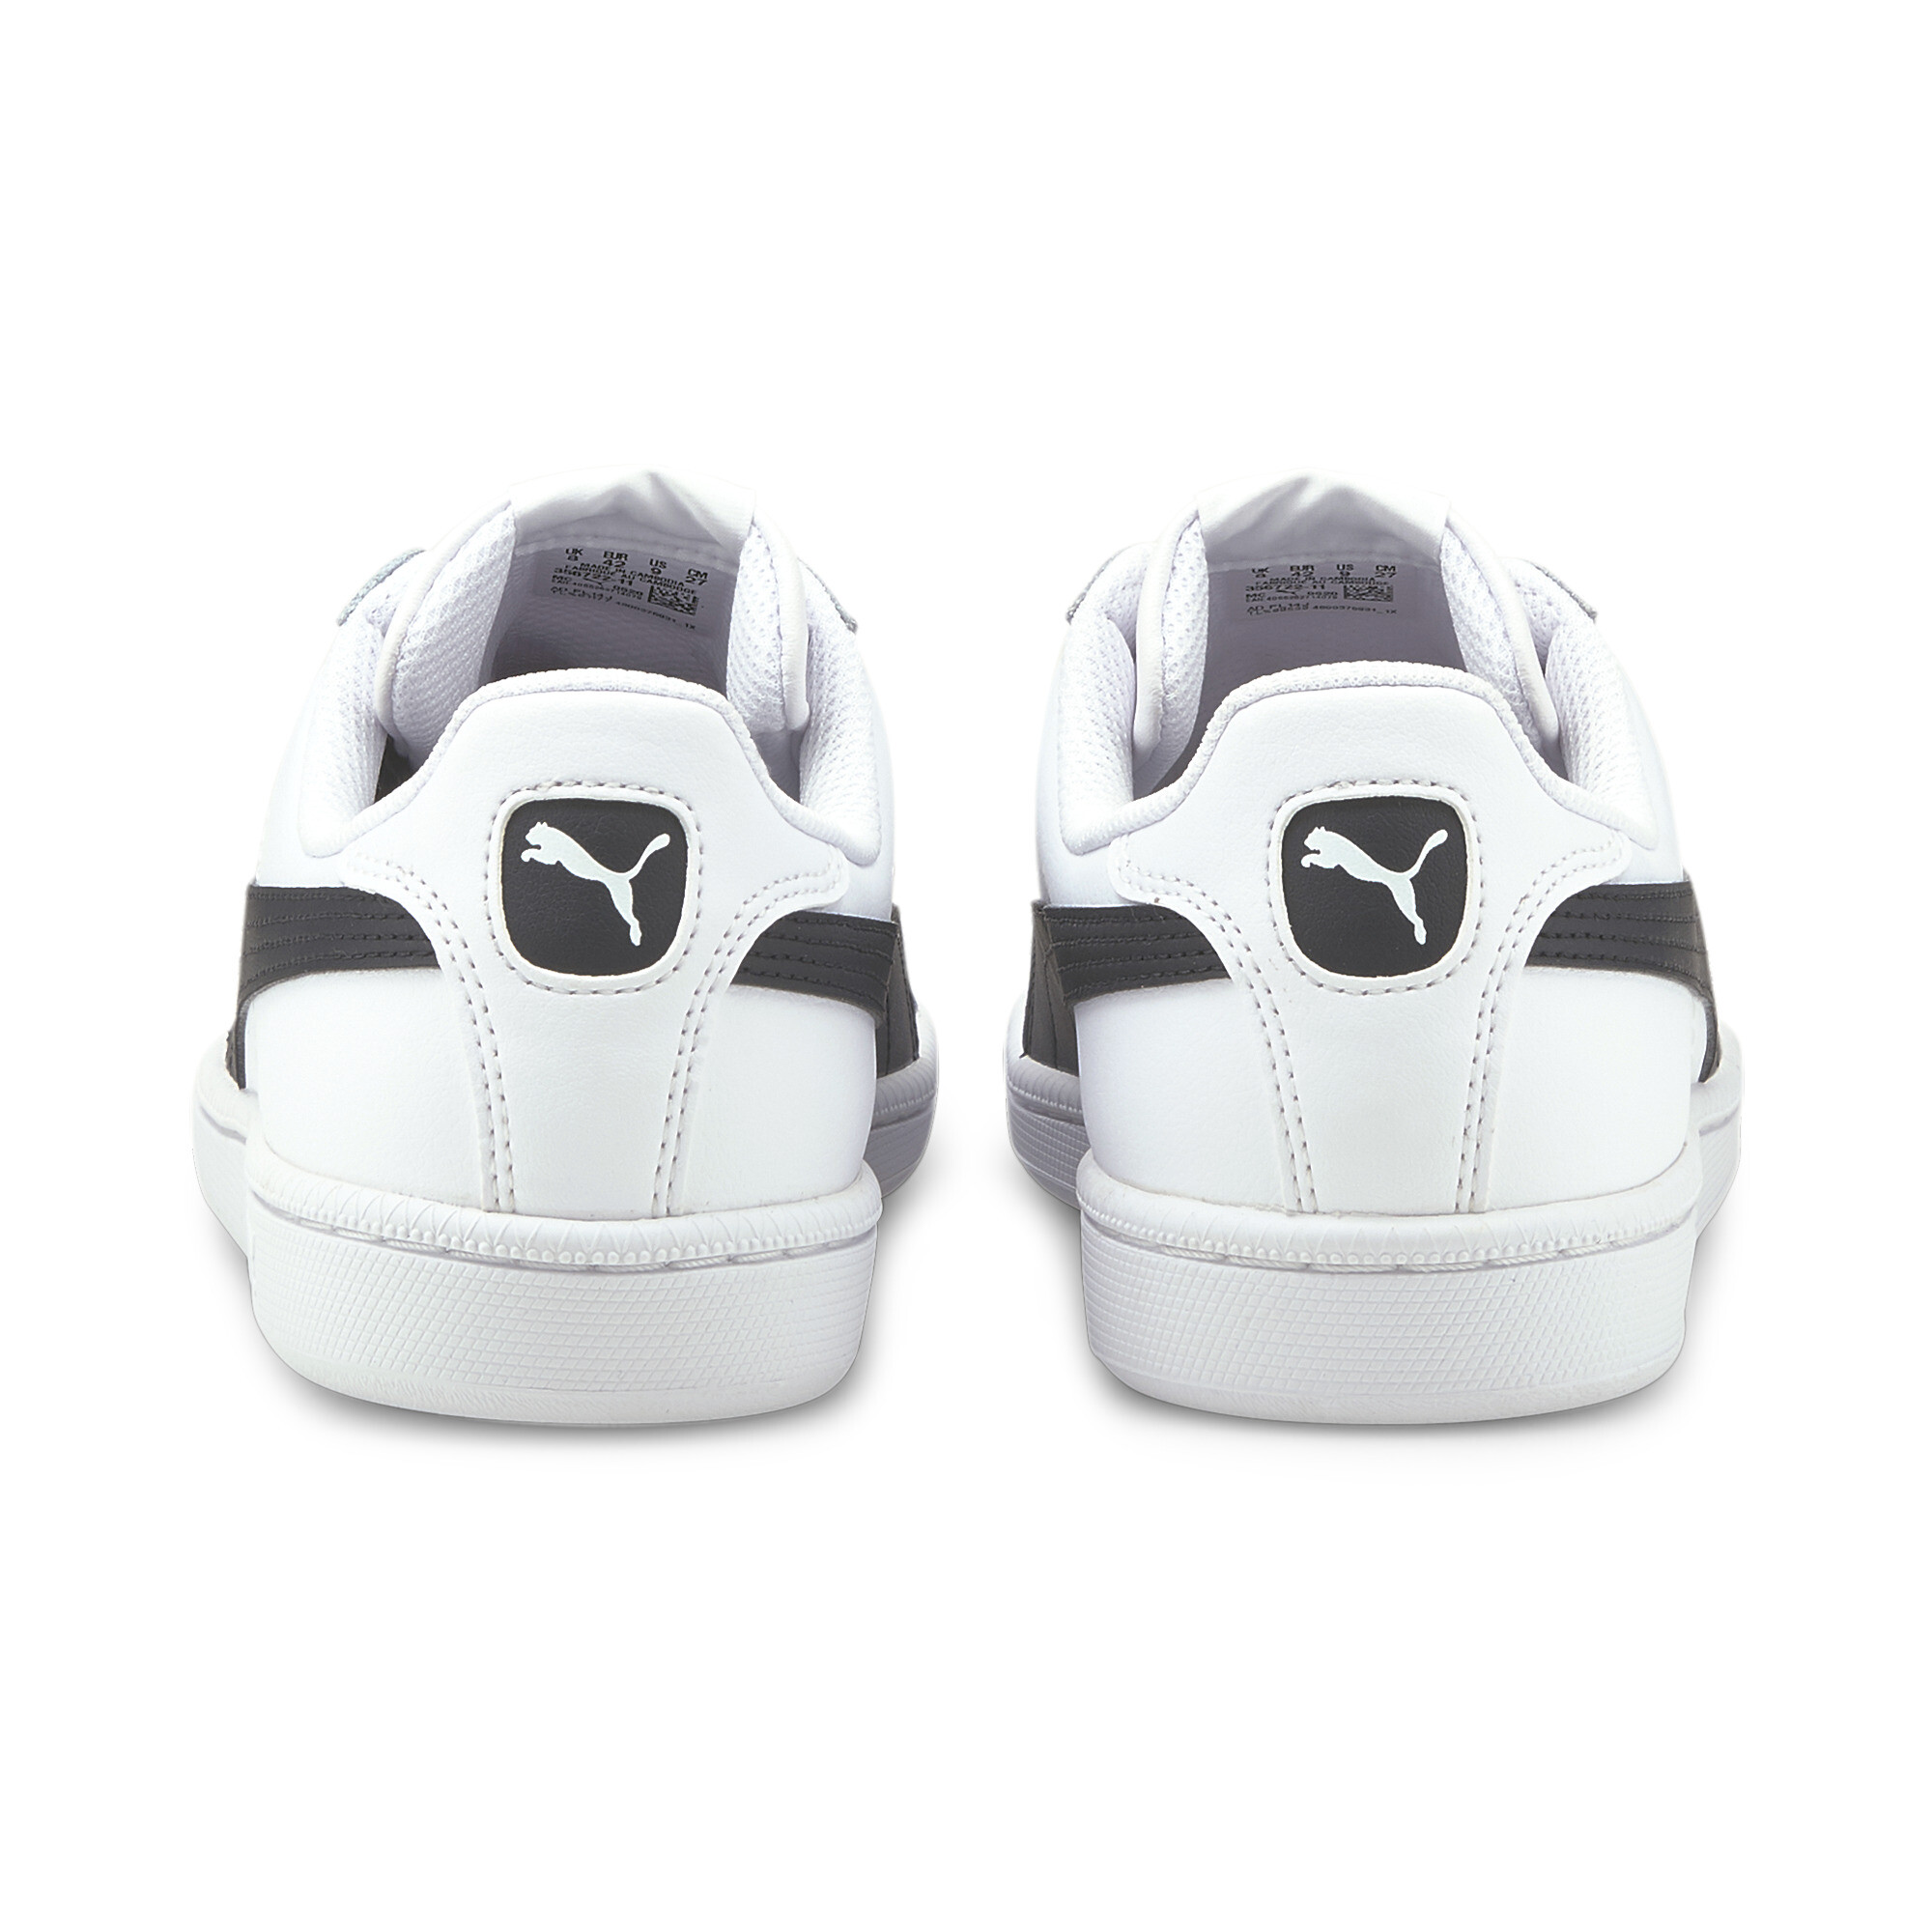 Indexbild 14 - PUMA Smash Trainers Schuhe Sneakers Sport Classics Unisex Neu